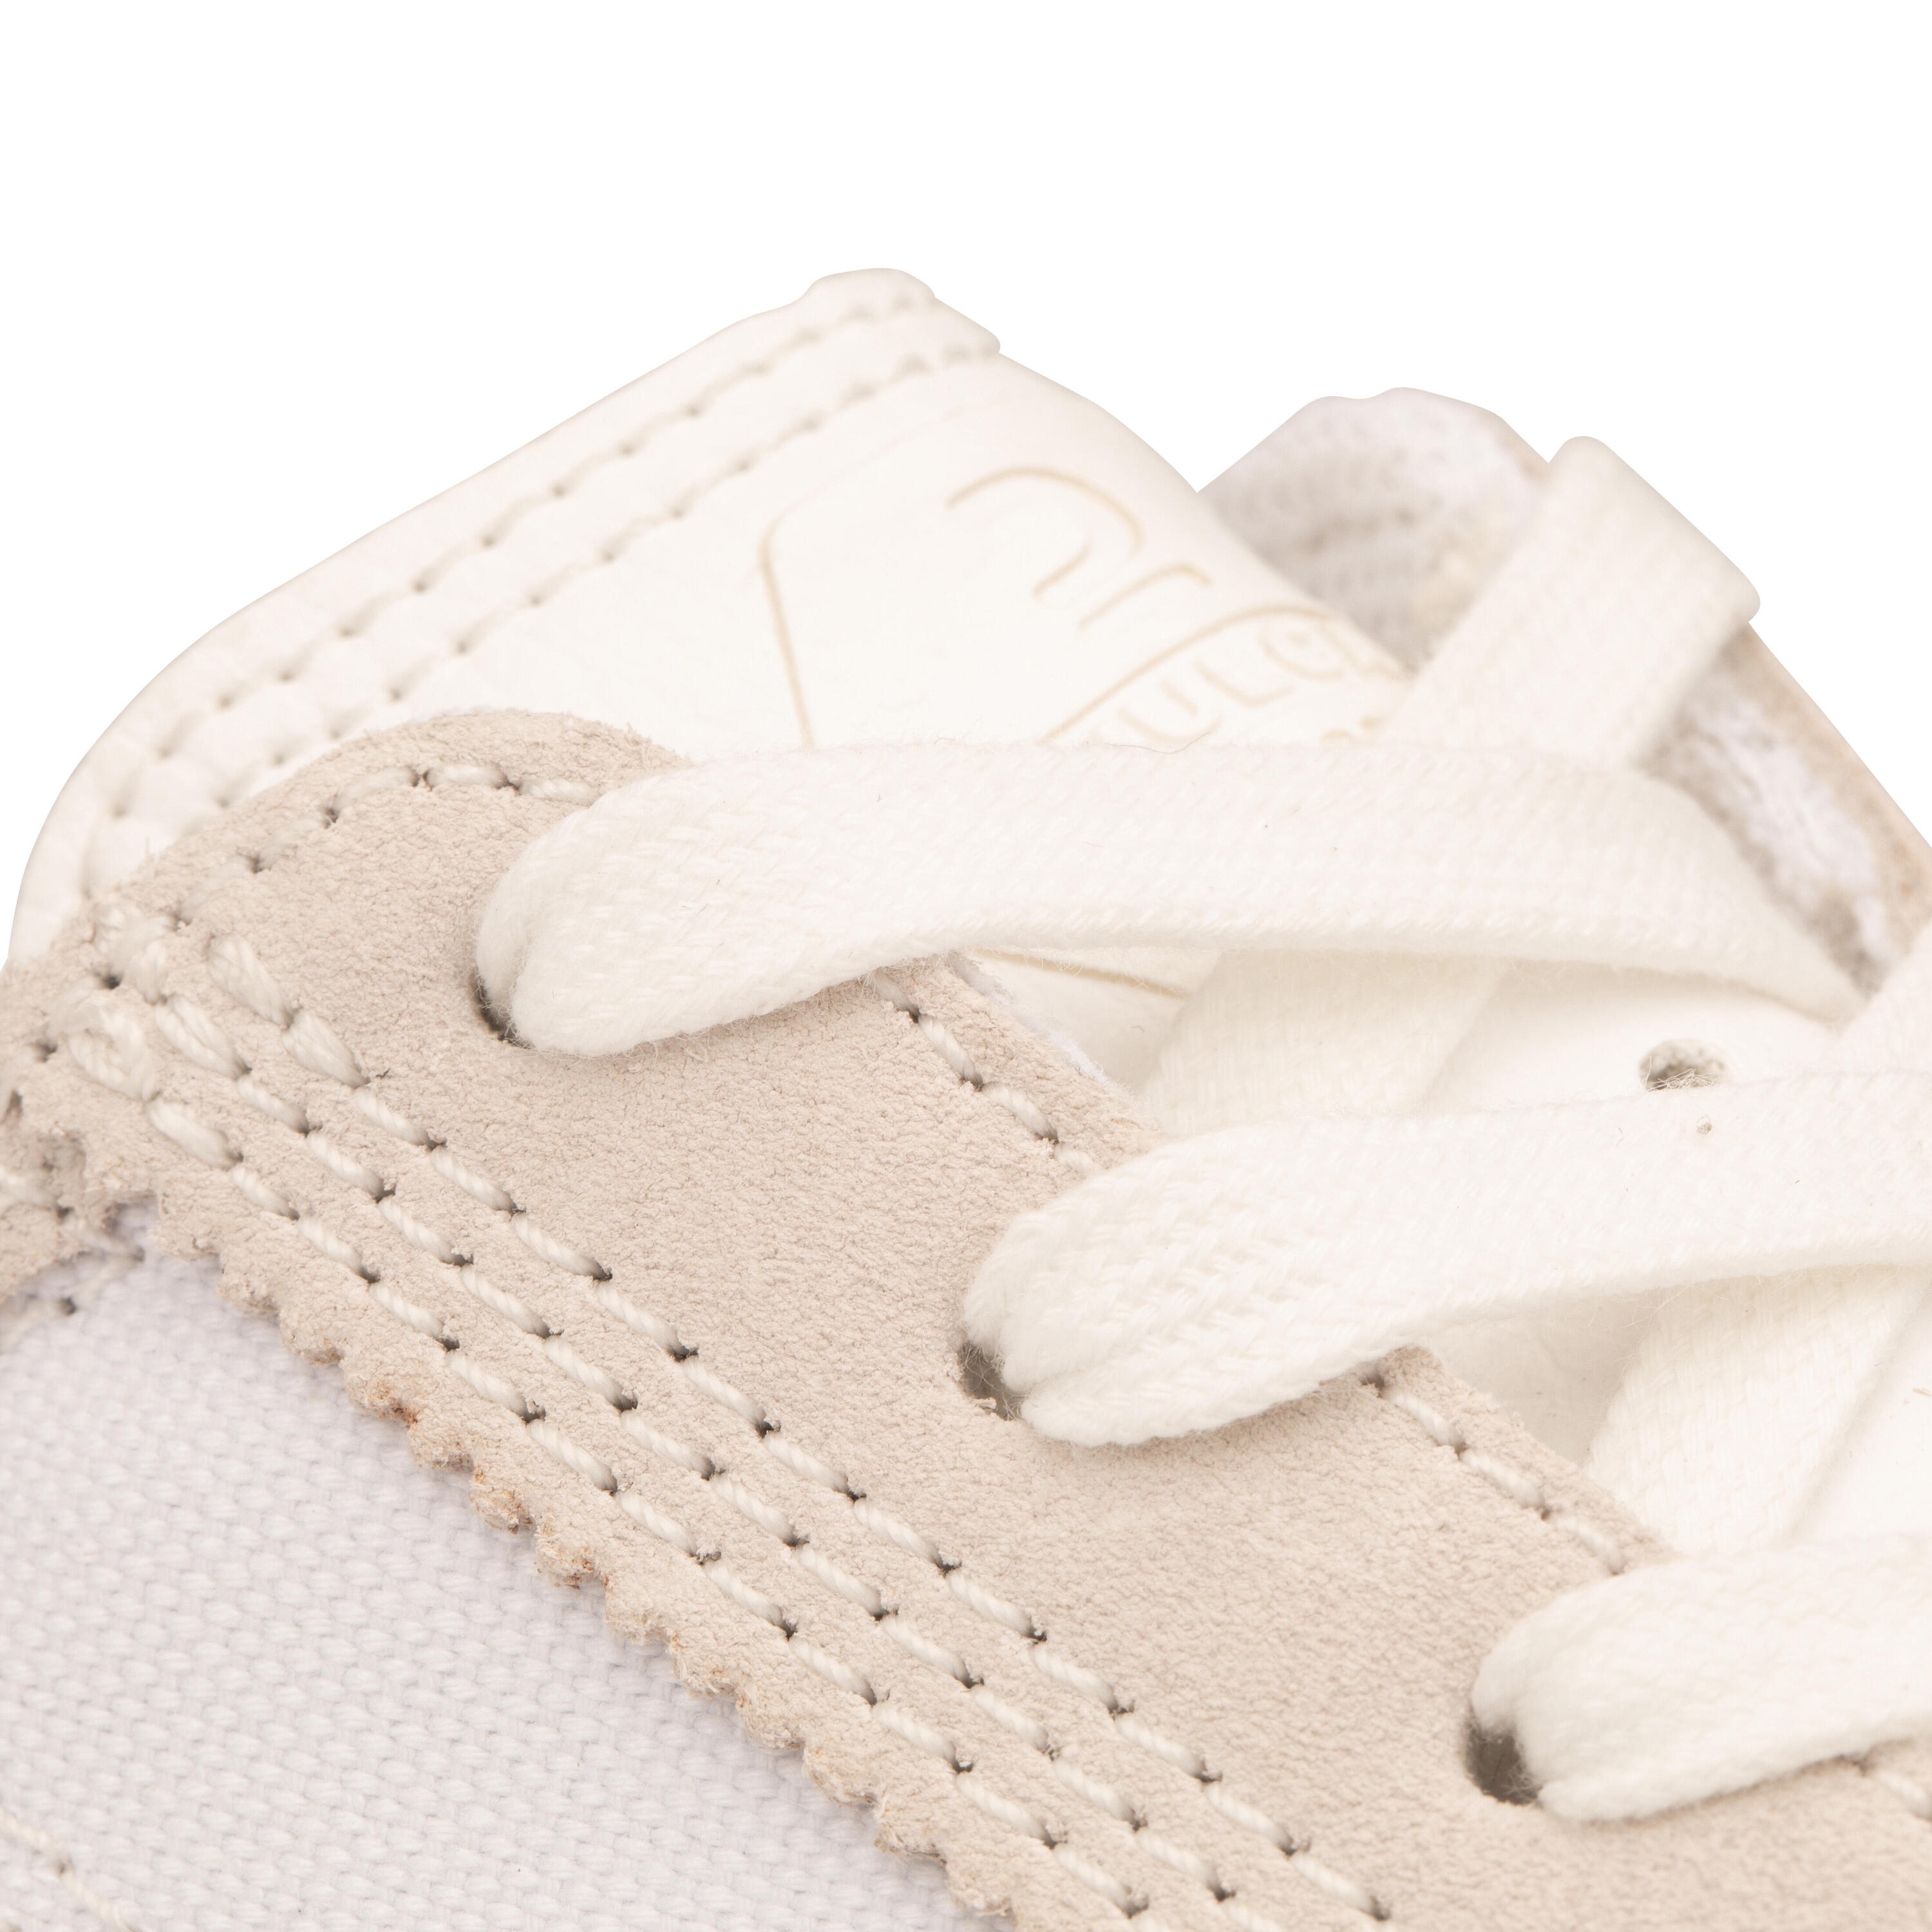 Adult Vulcanised Skate Shoes Vulca 500 II - White/White 13/17